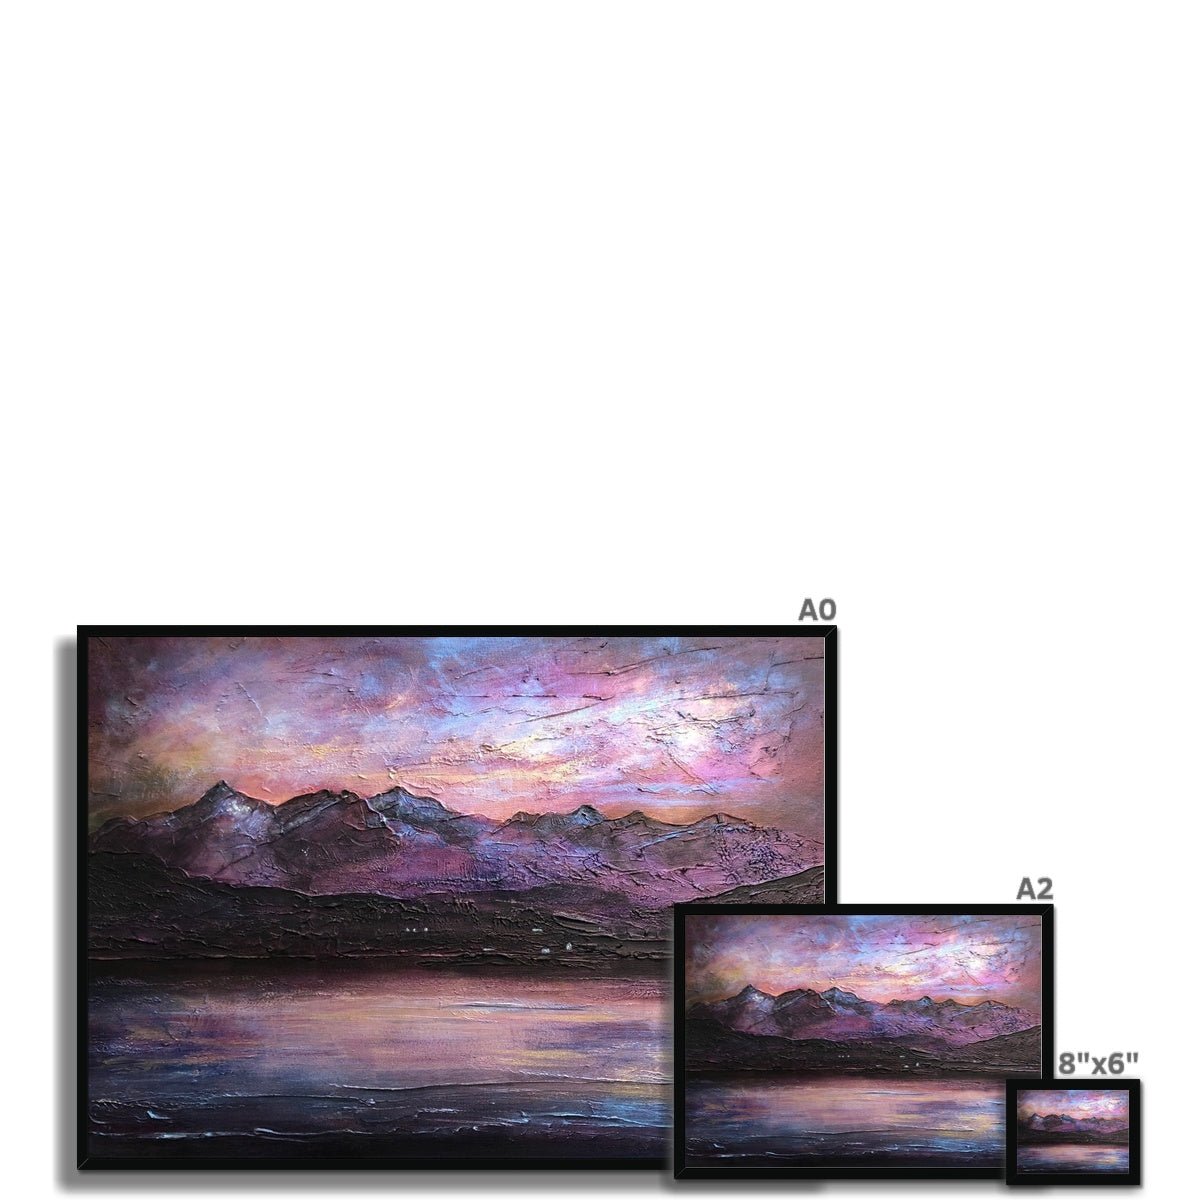 Last Skye Light Painting | Framed Prints From Scotland-Framed Prints-Skye Art Gallery-Paintings, Prints, Homeware, Art Gifts From Scotland By Scottish Artist Kevin Hunter